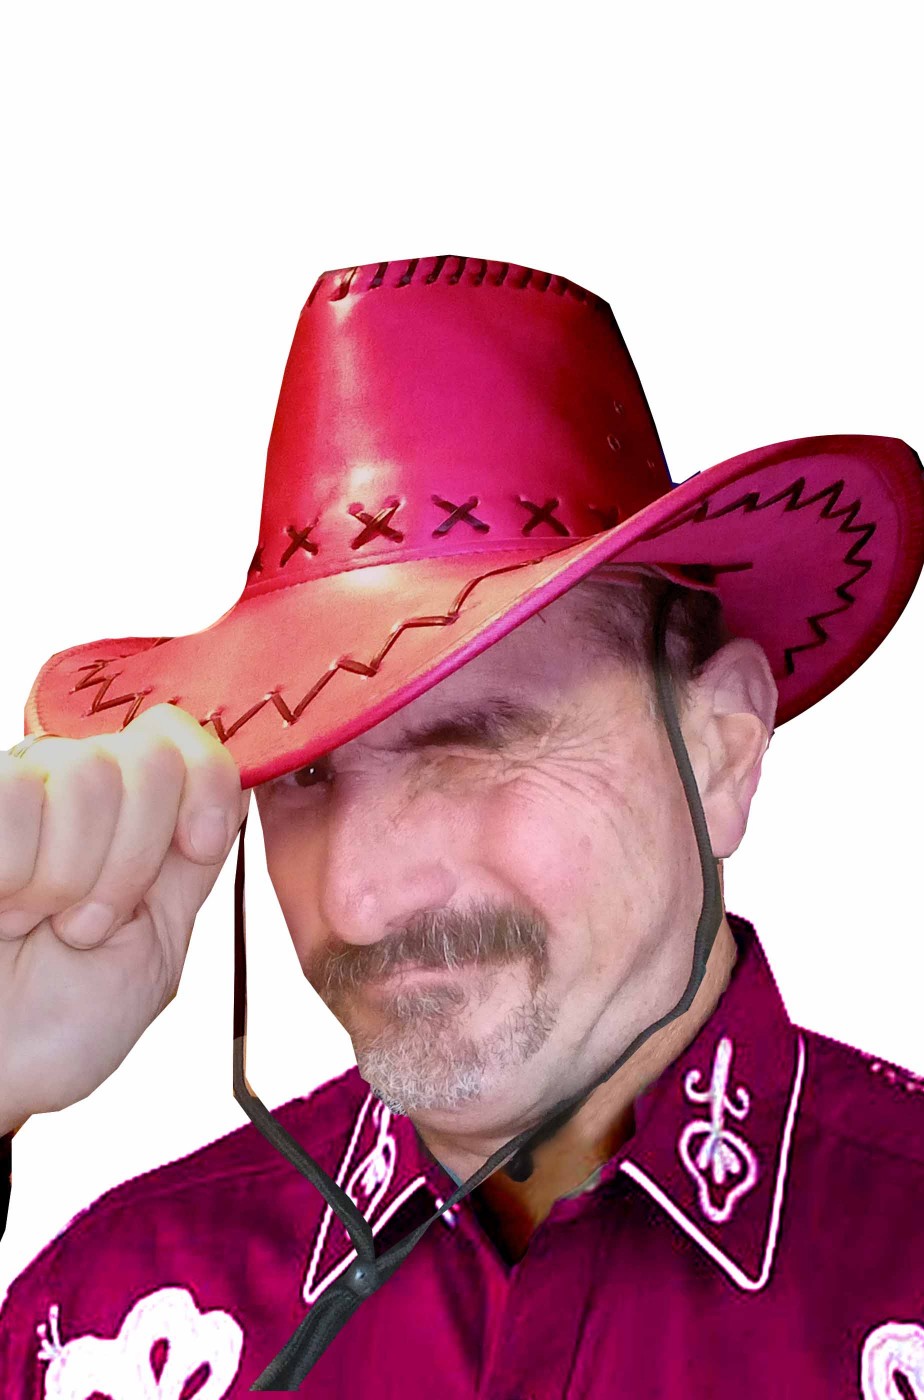 Cappello cowboy o cowgirl rosa